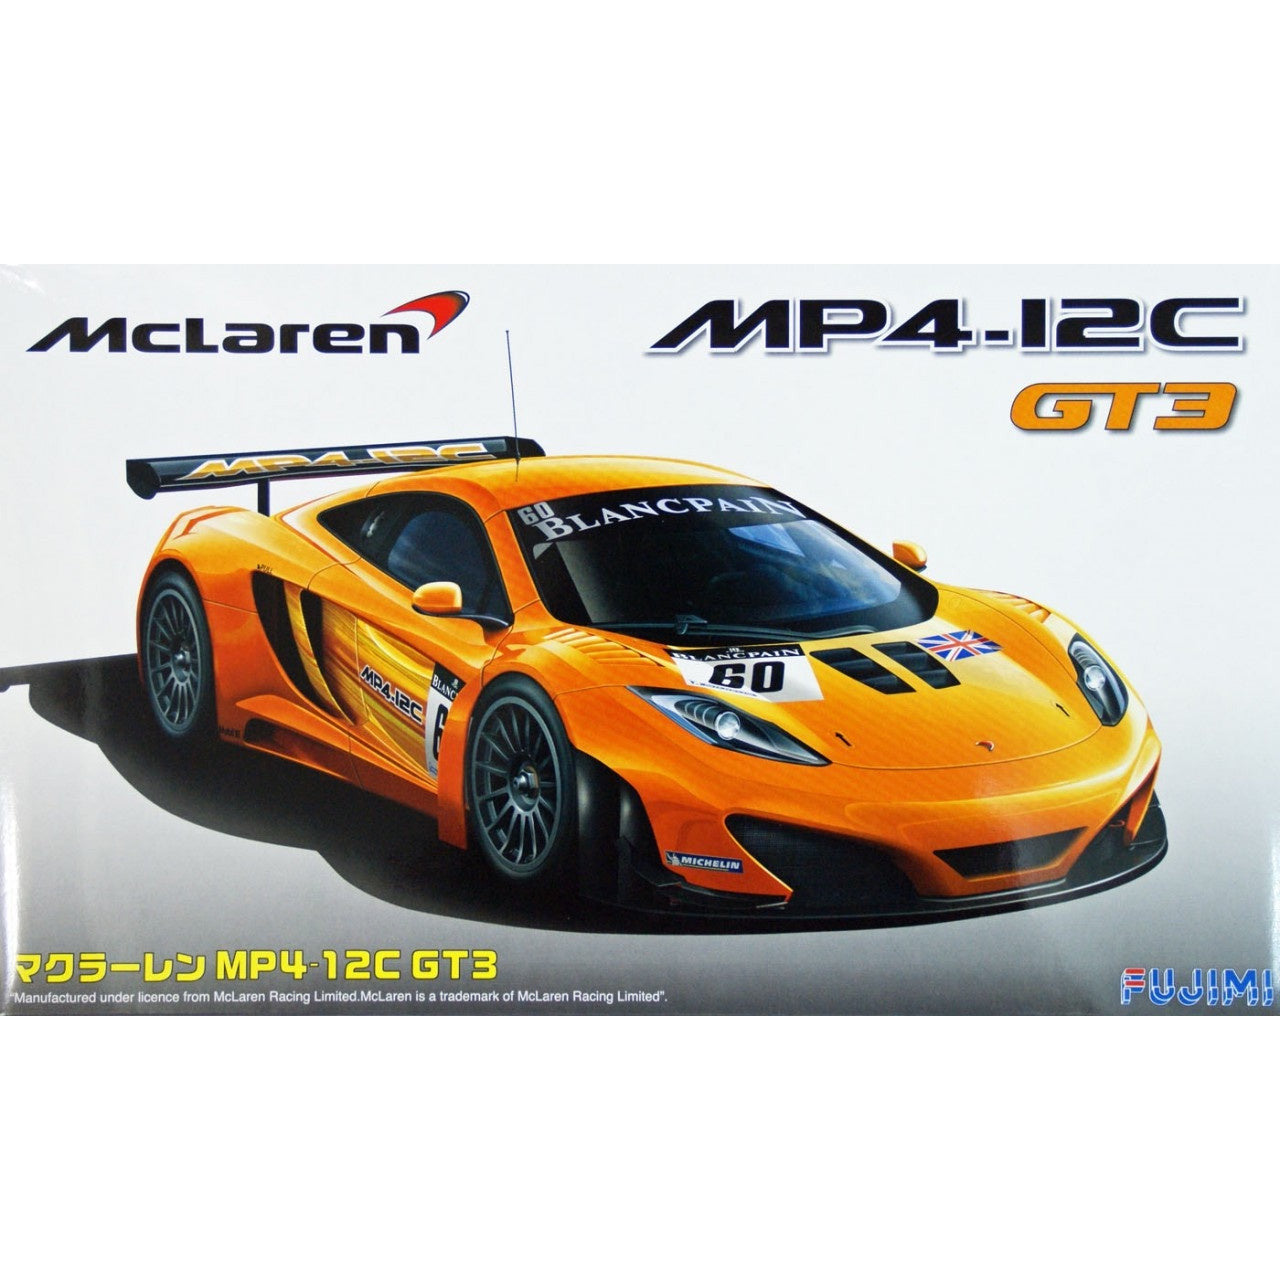 RS-44 McLaren MP4-12C GT3 1/24 #125558 by Fujimi